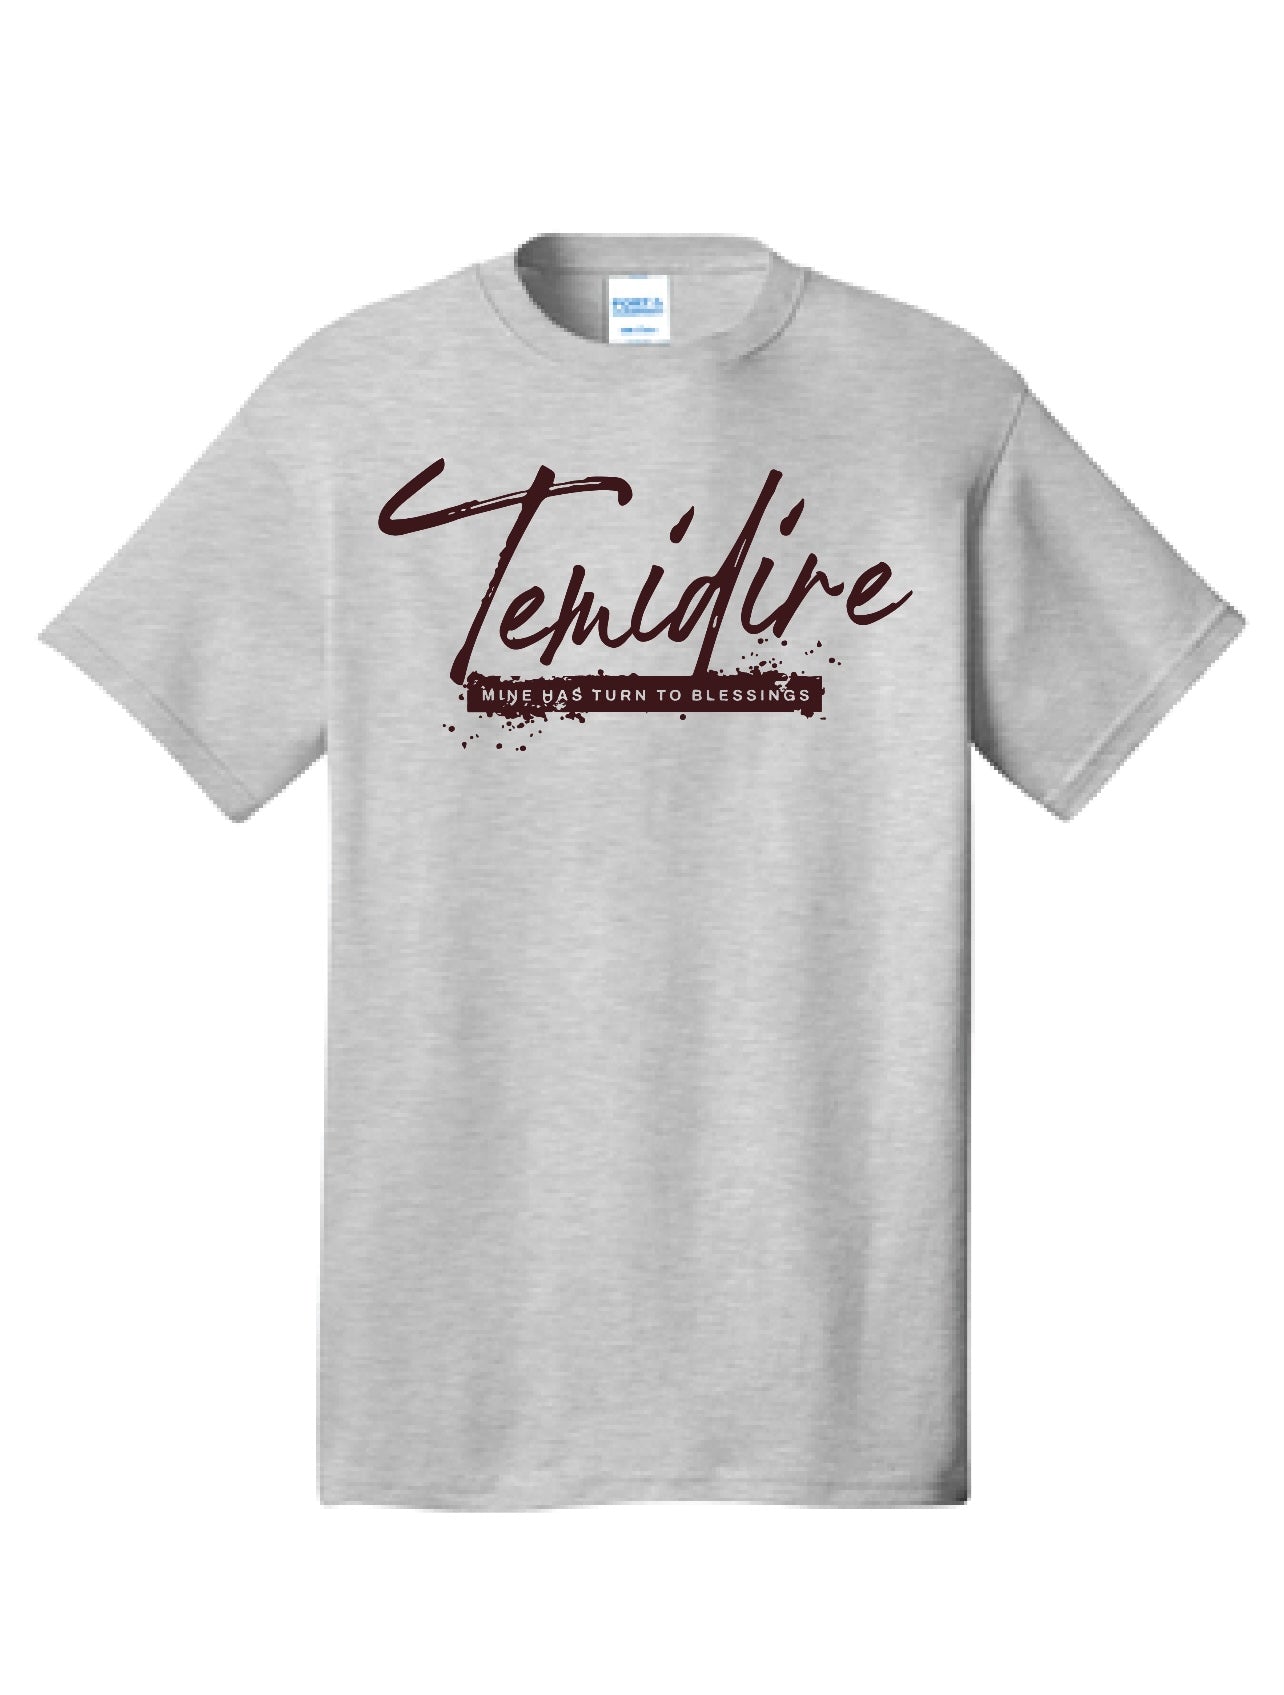 Logo Shirt - Temidire - Mine has turn to blessings.